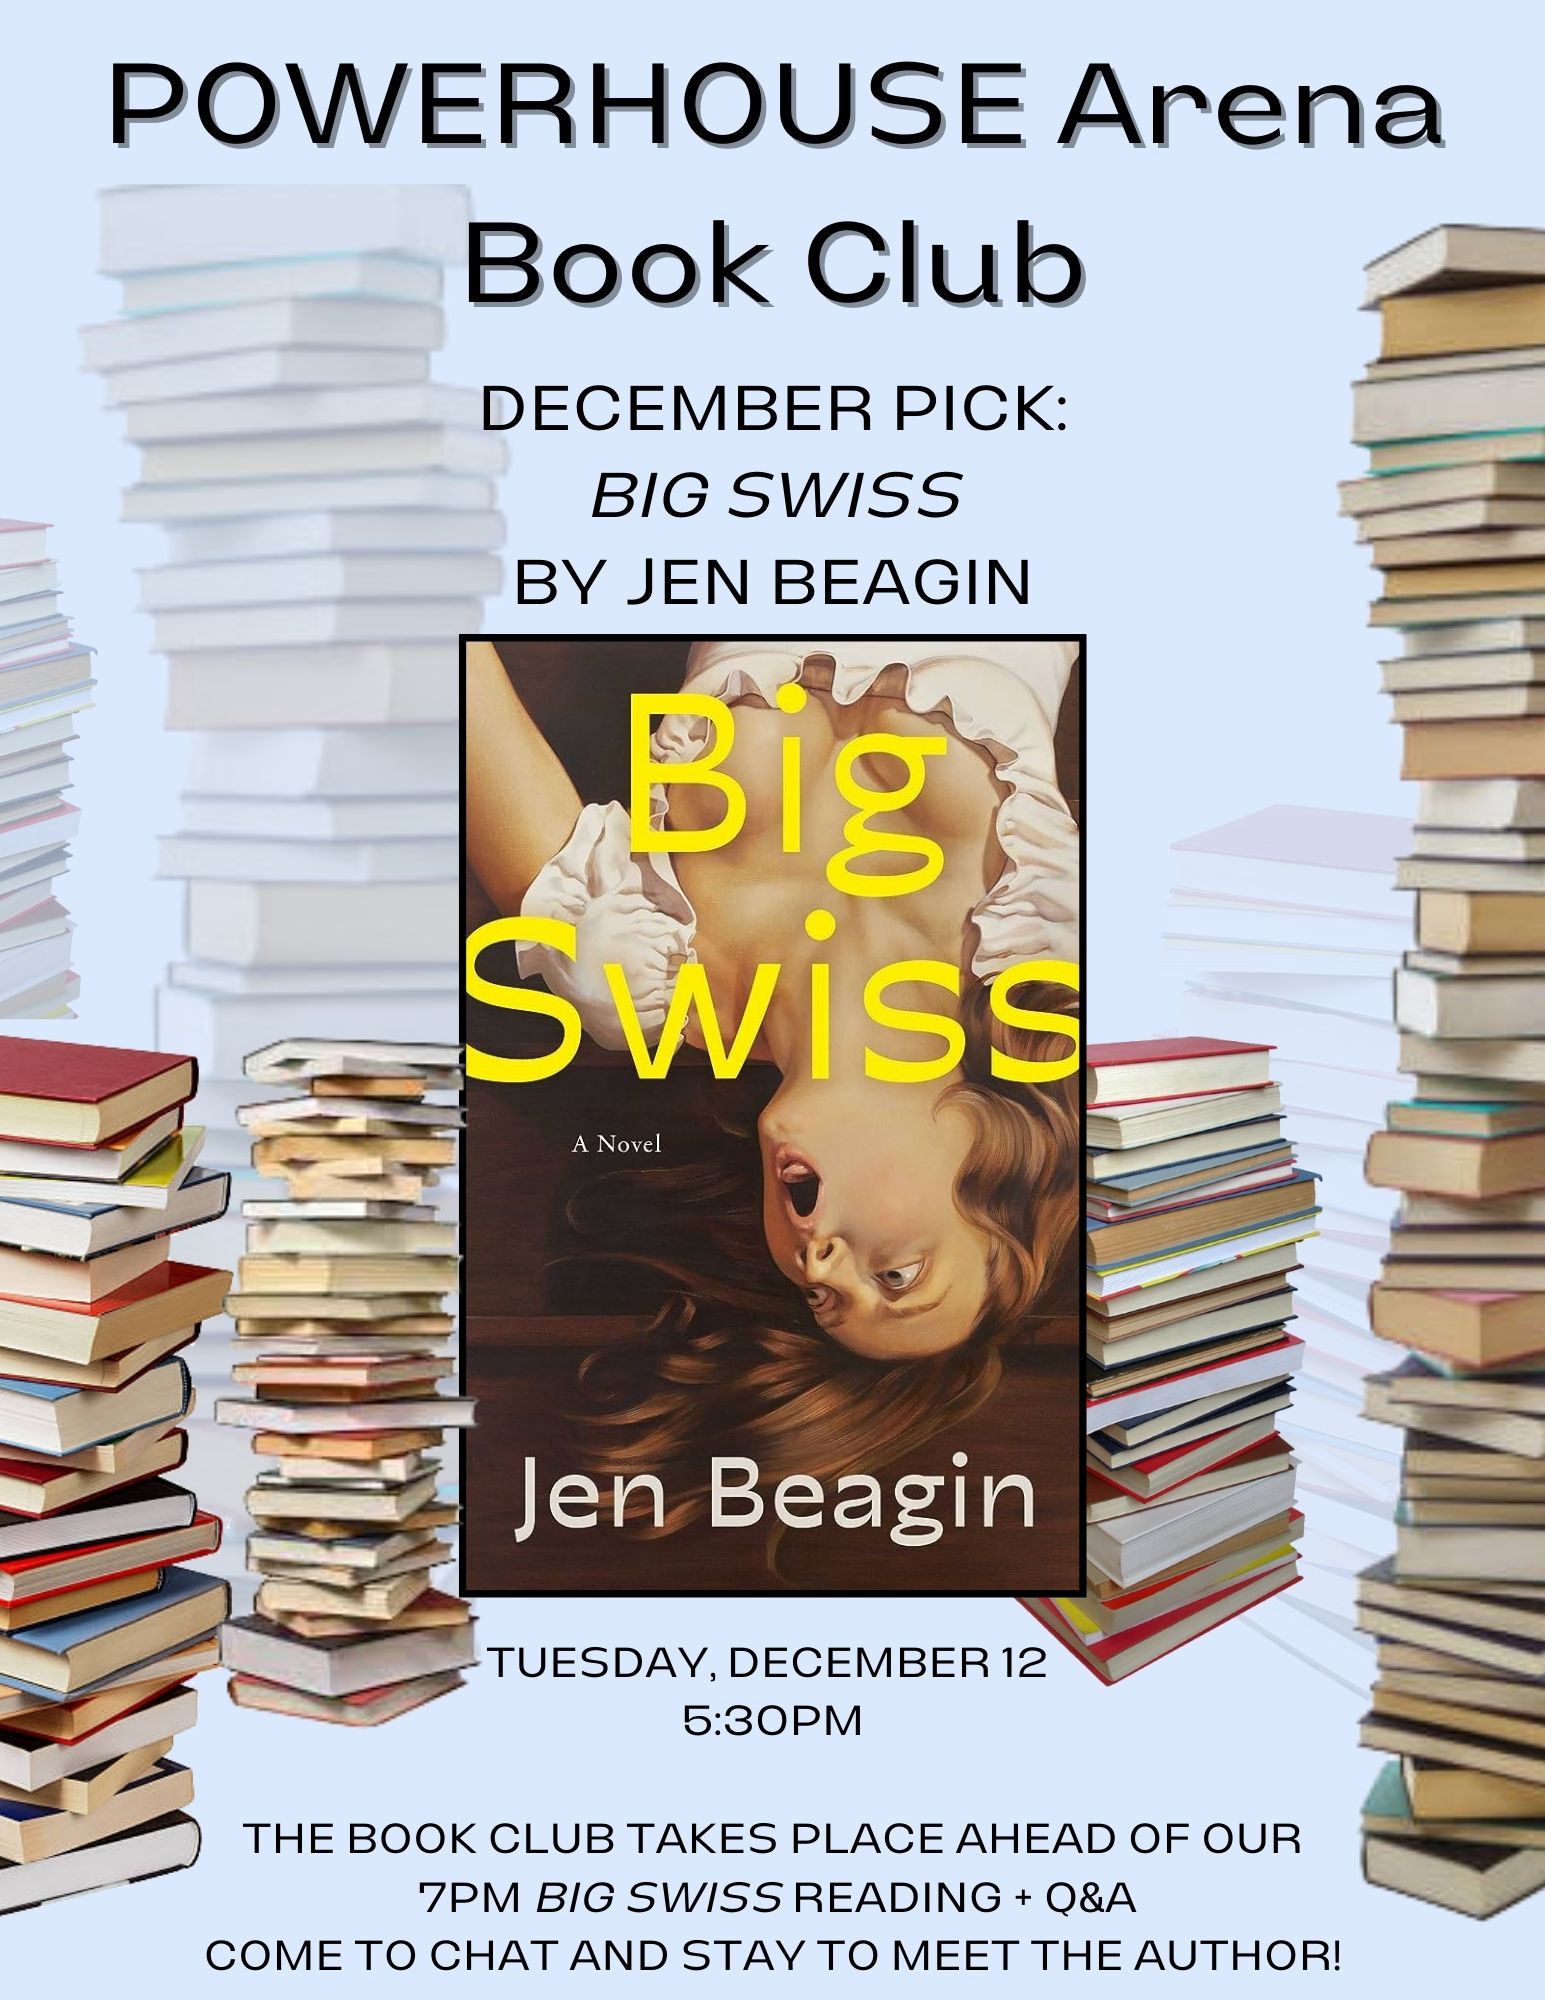 POWERHOUSE Arena PRE-EVENT BOOK CLUB: Big Swiss by Jen Beagin